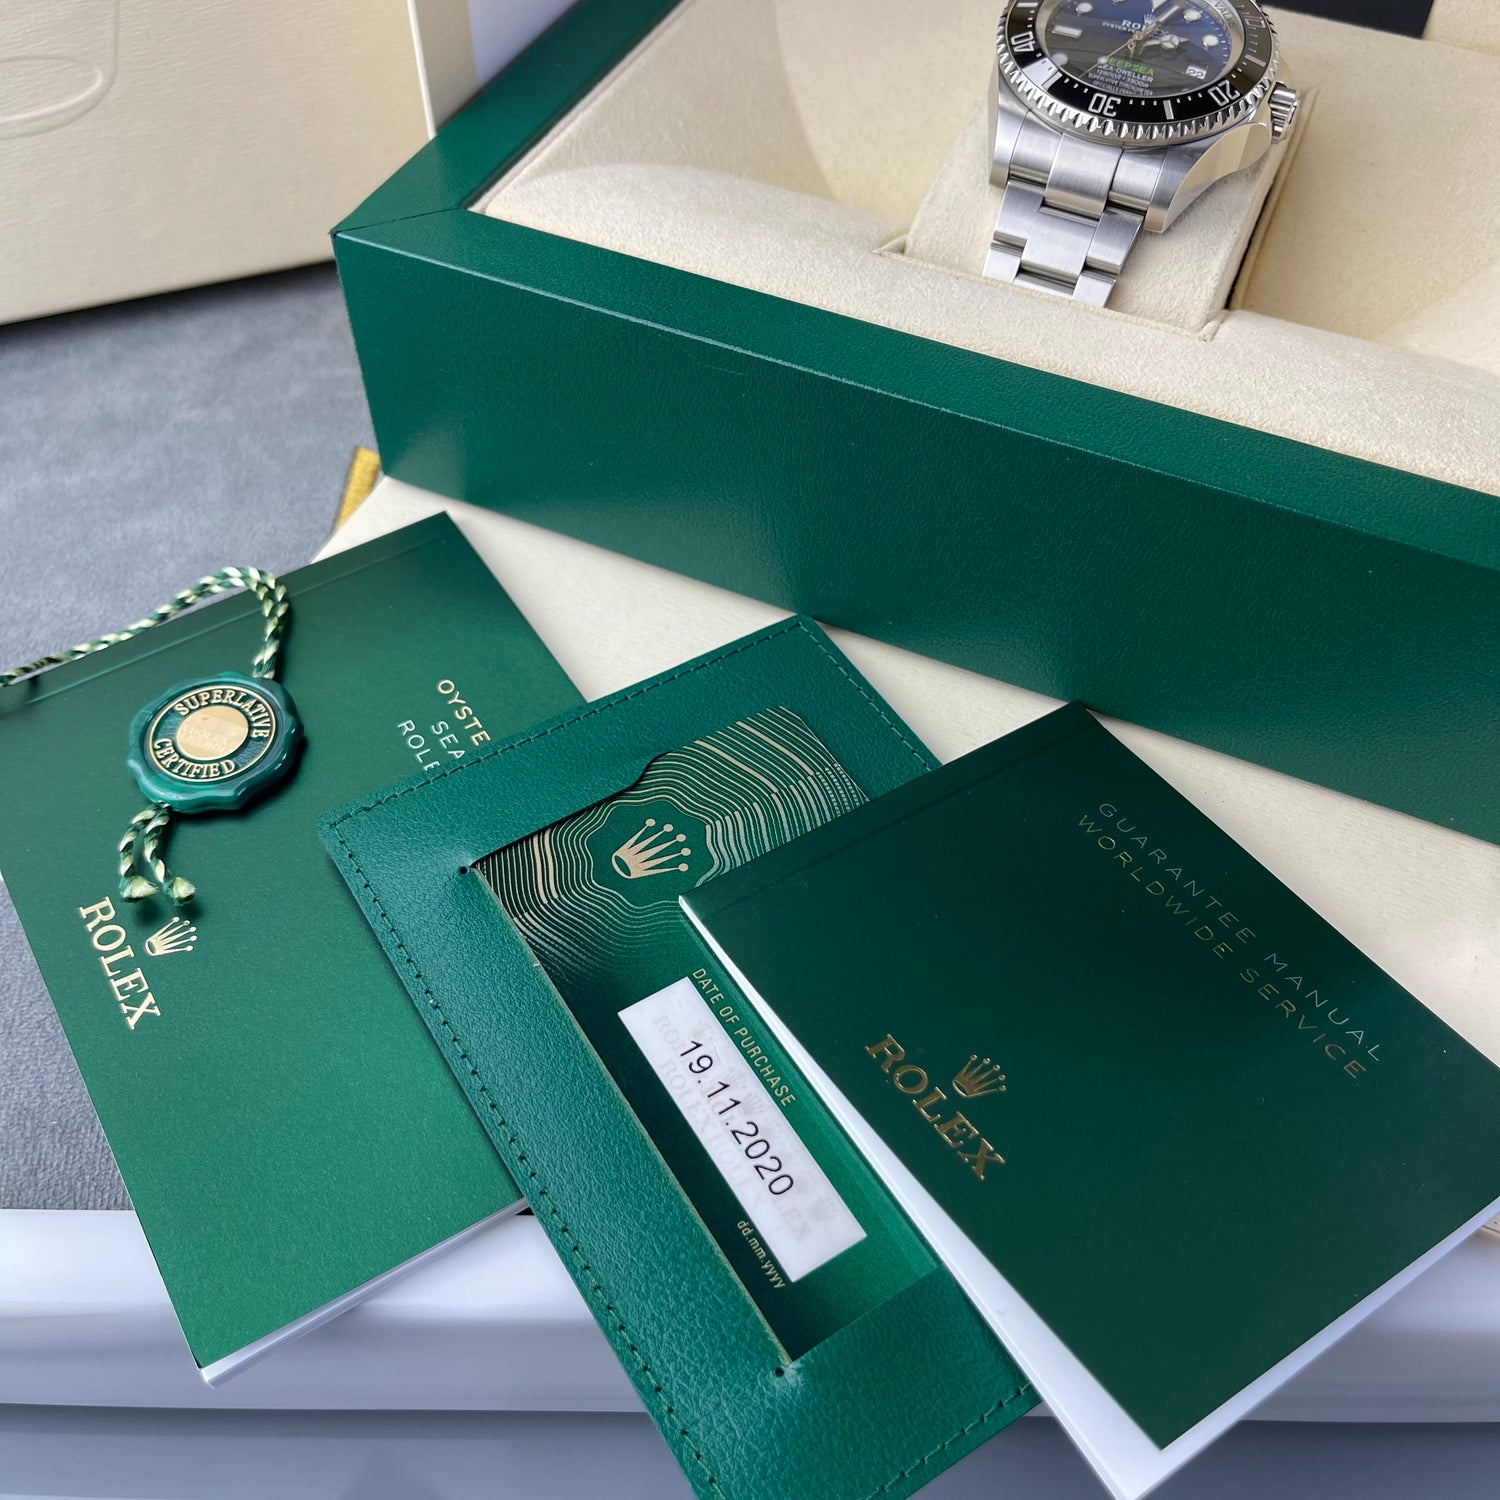 Rolex DeepSea James Cameron 126660 2020 Mint Condition Full Set Watch